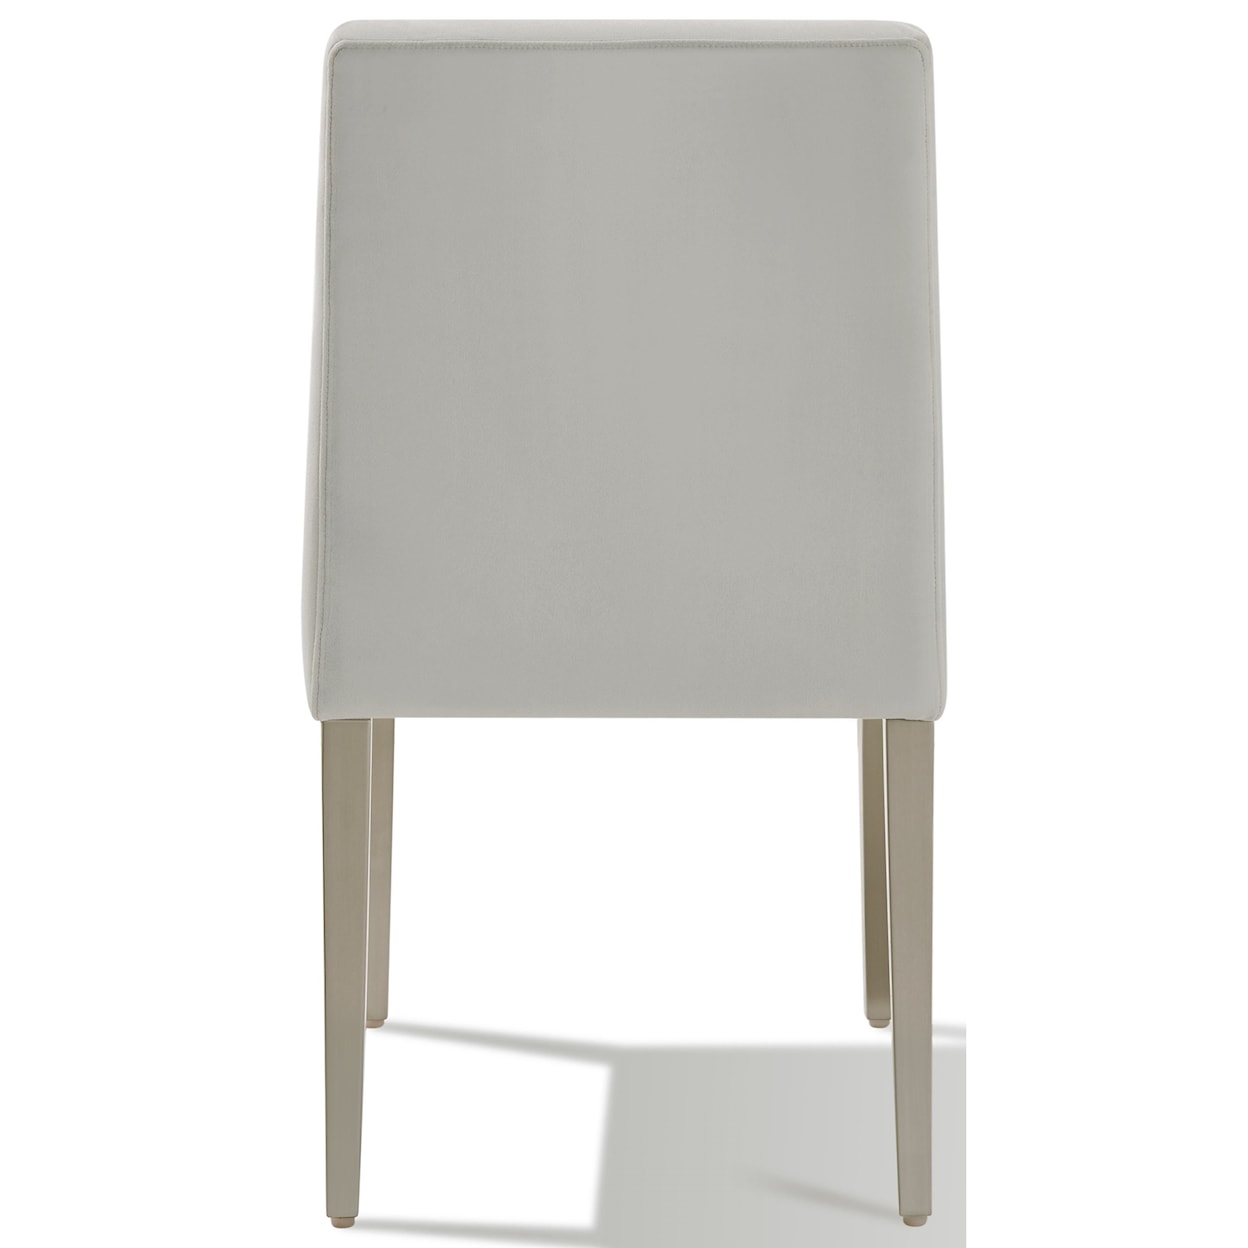 Modus International Omnia Chair - Smoke/Brushed Stainless Steel